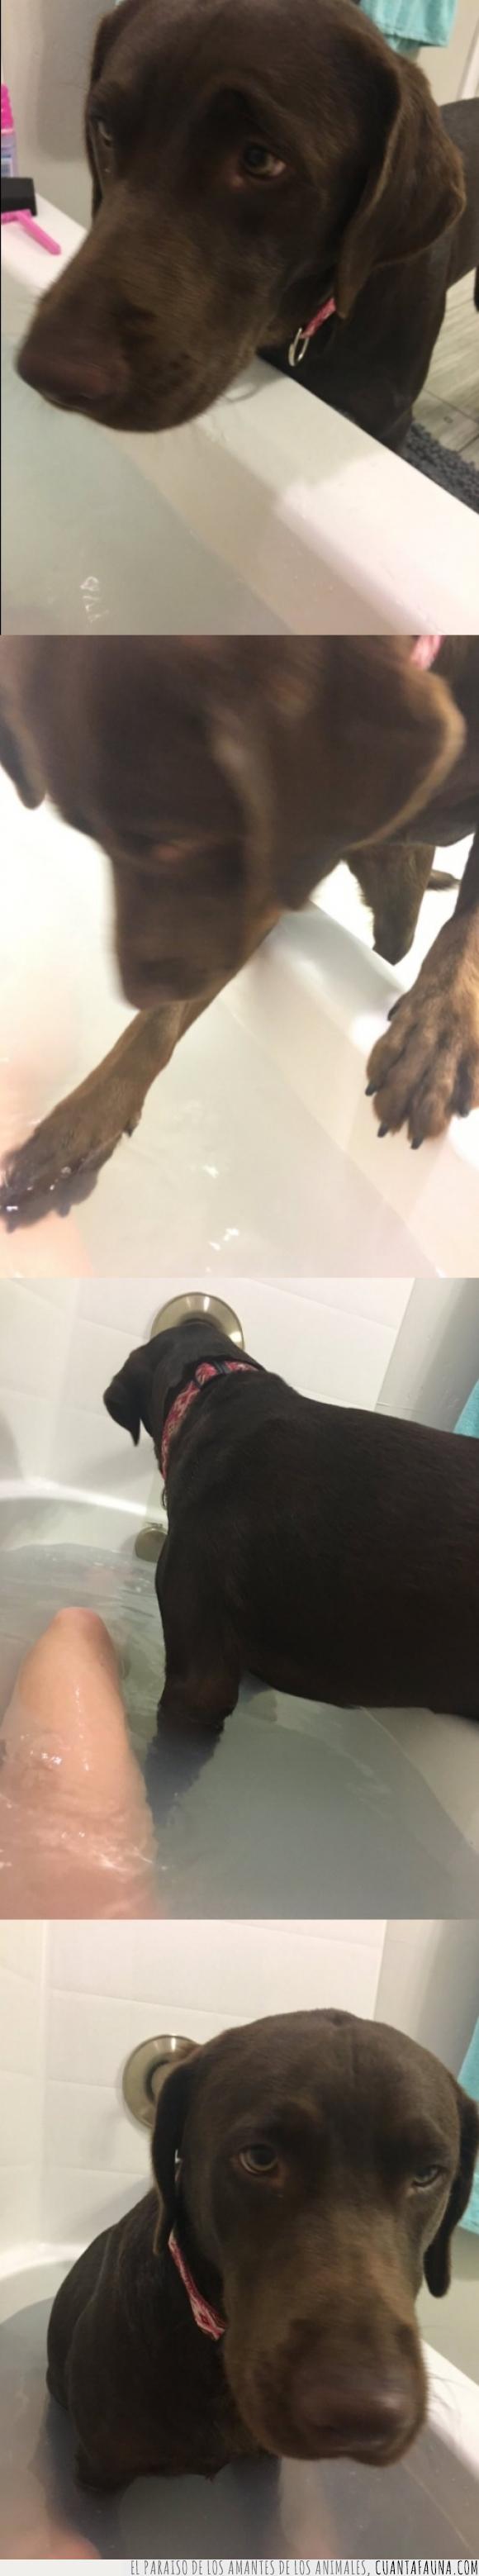 agua,bañar,bañera,compañía,mascota,meter,perra,perro